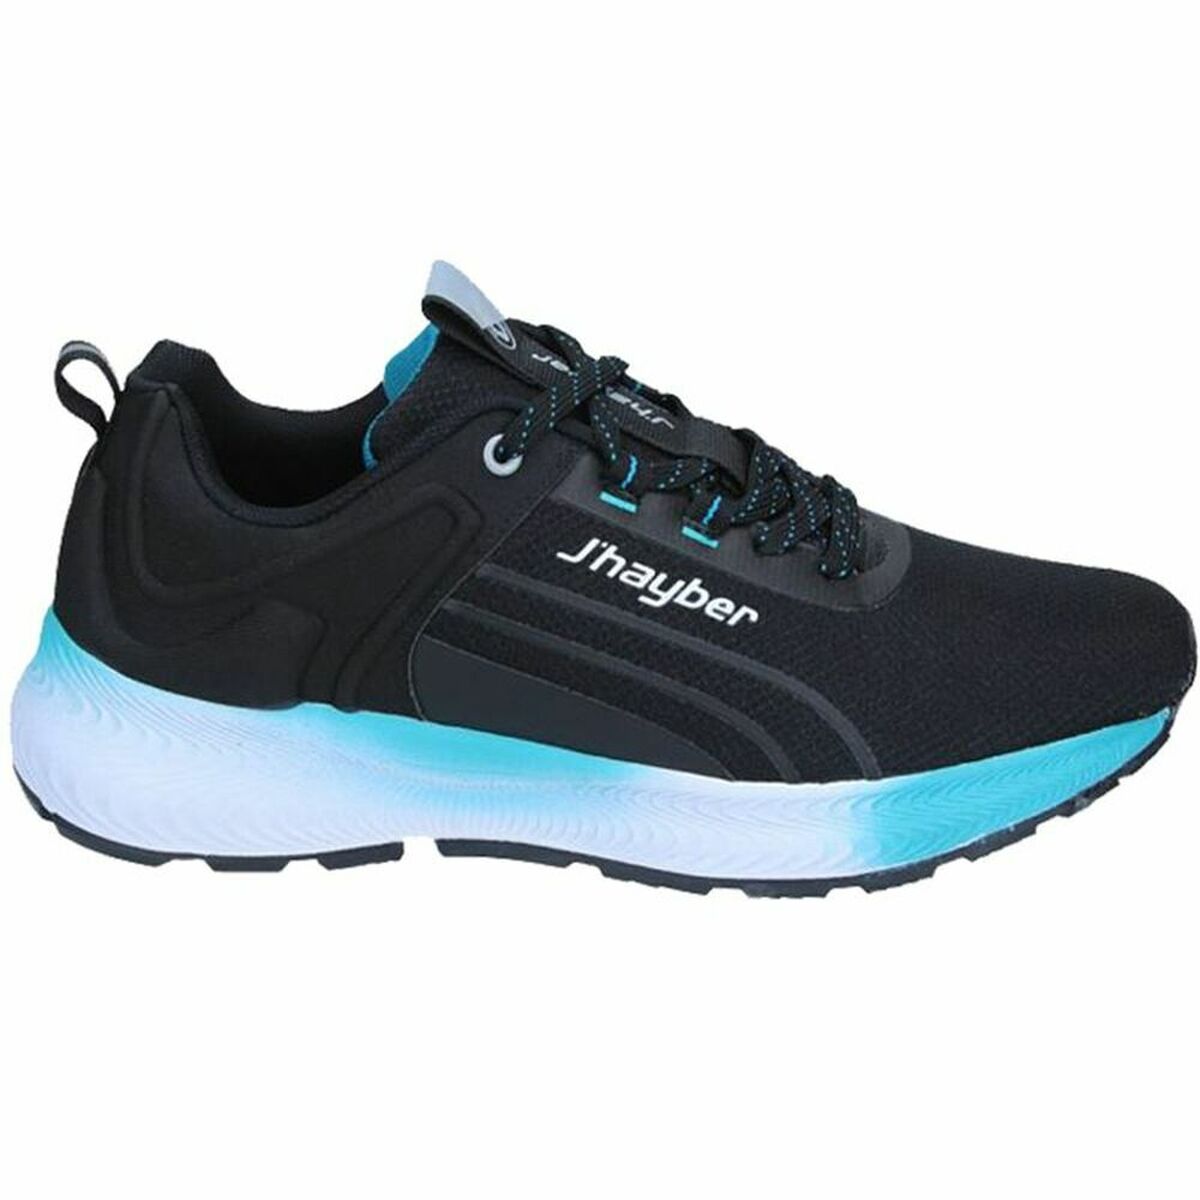 Chaussures de Running pour Adultes J-Hayber Chaton Noir